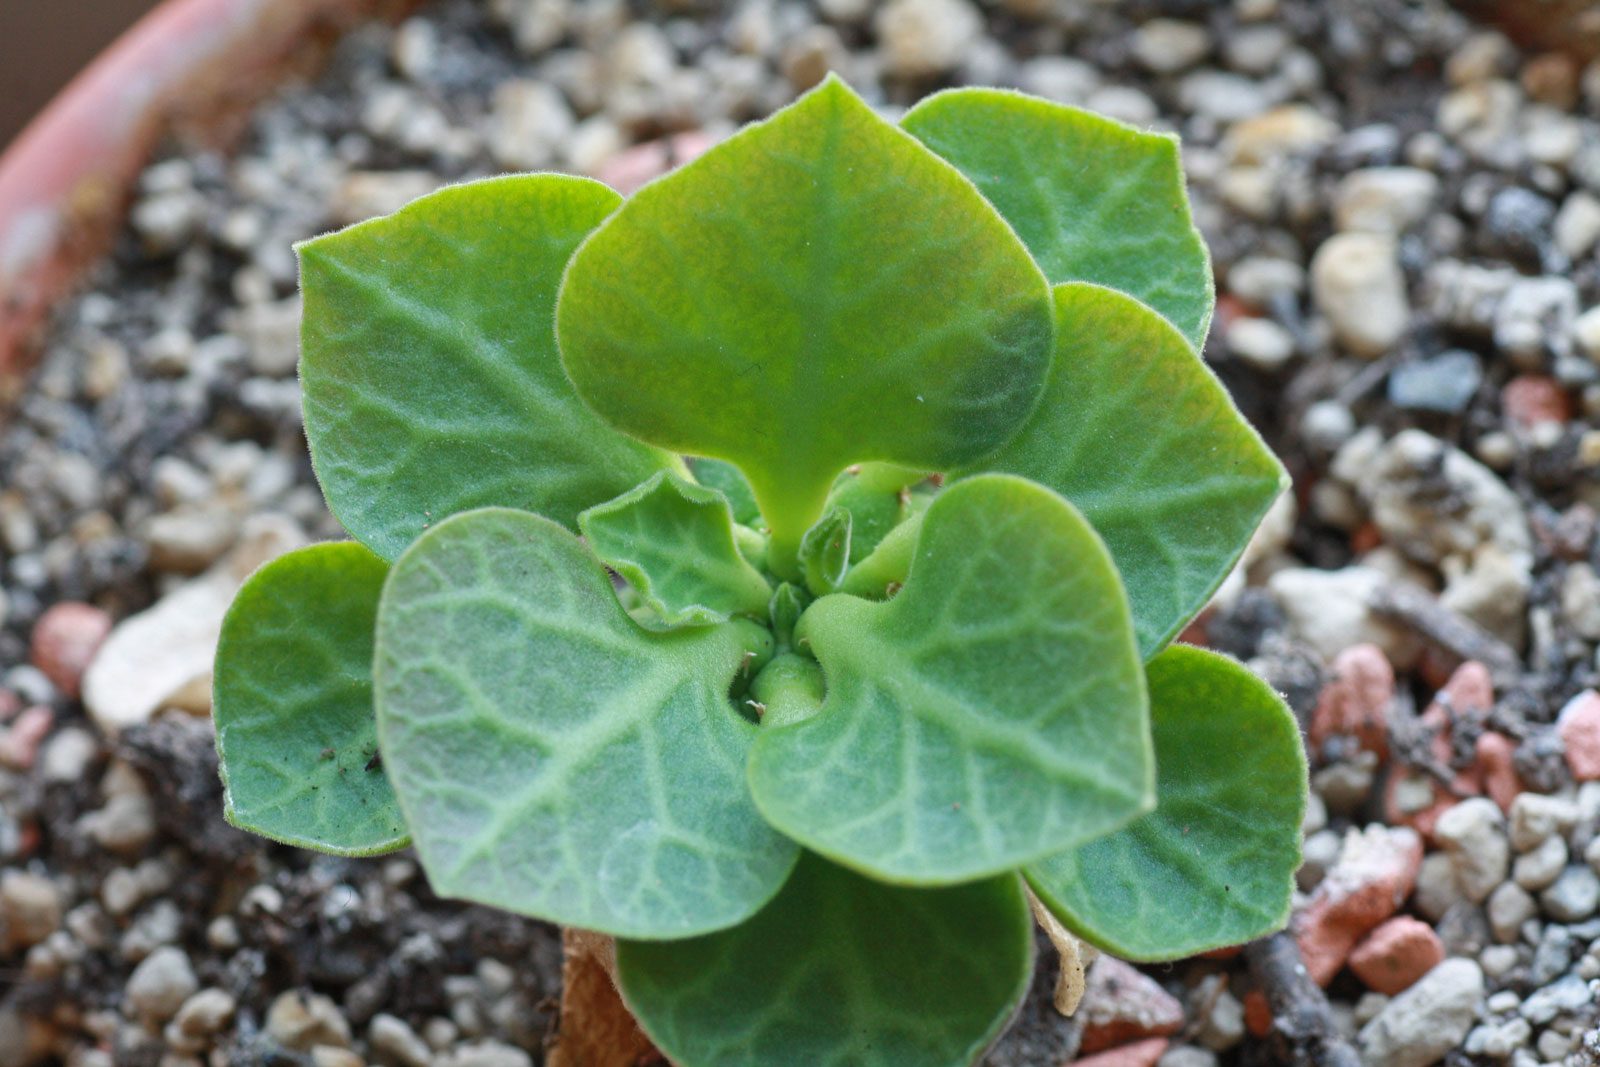 Euphorbia neoreflexa